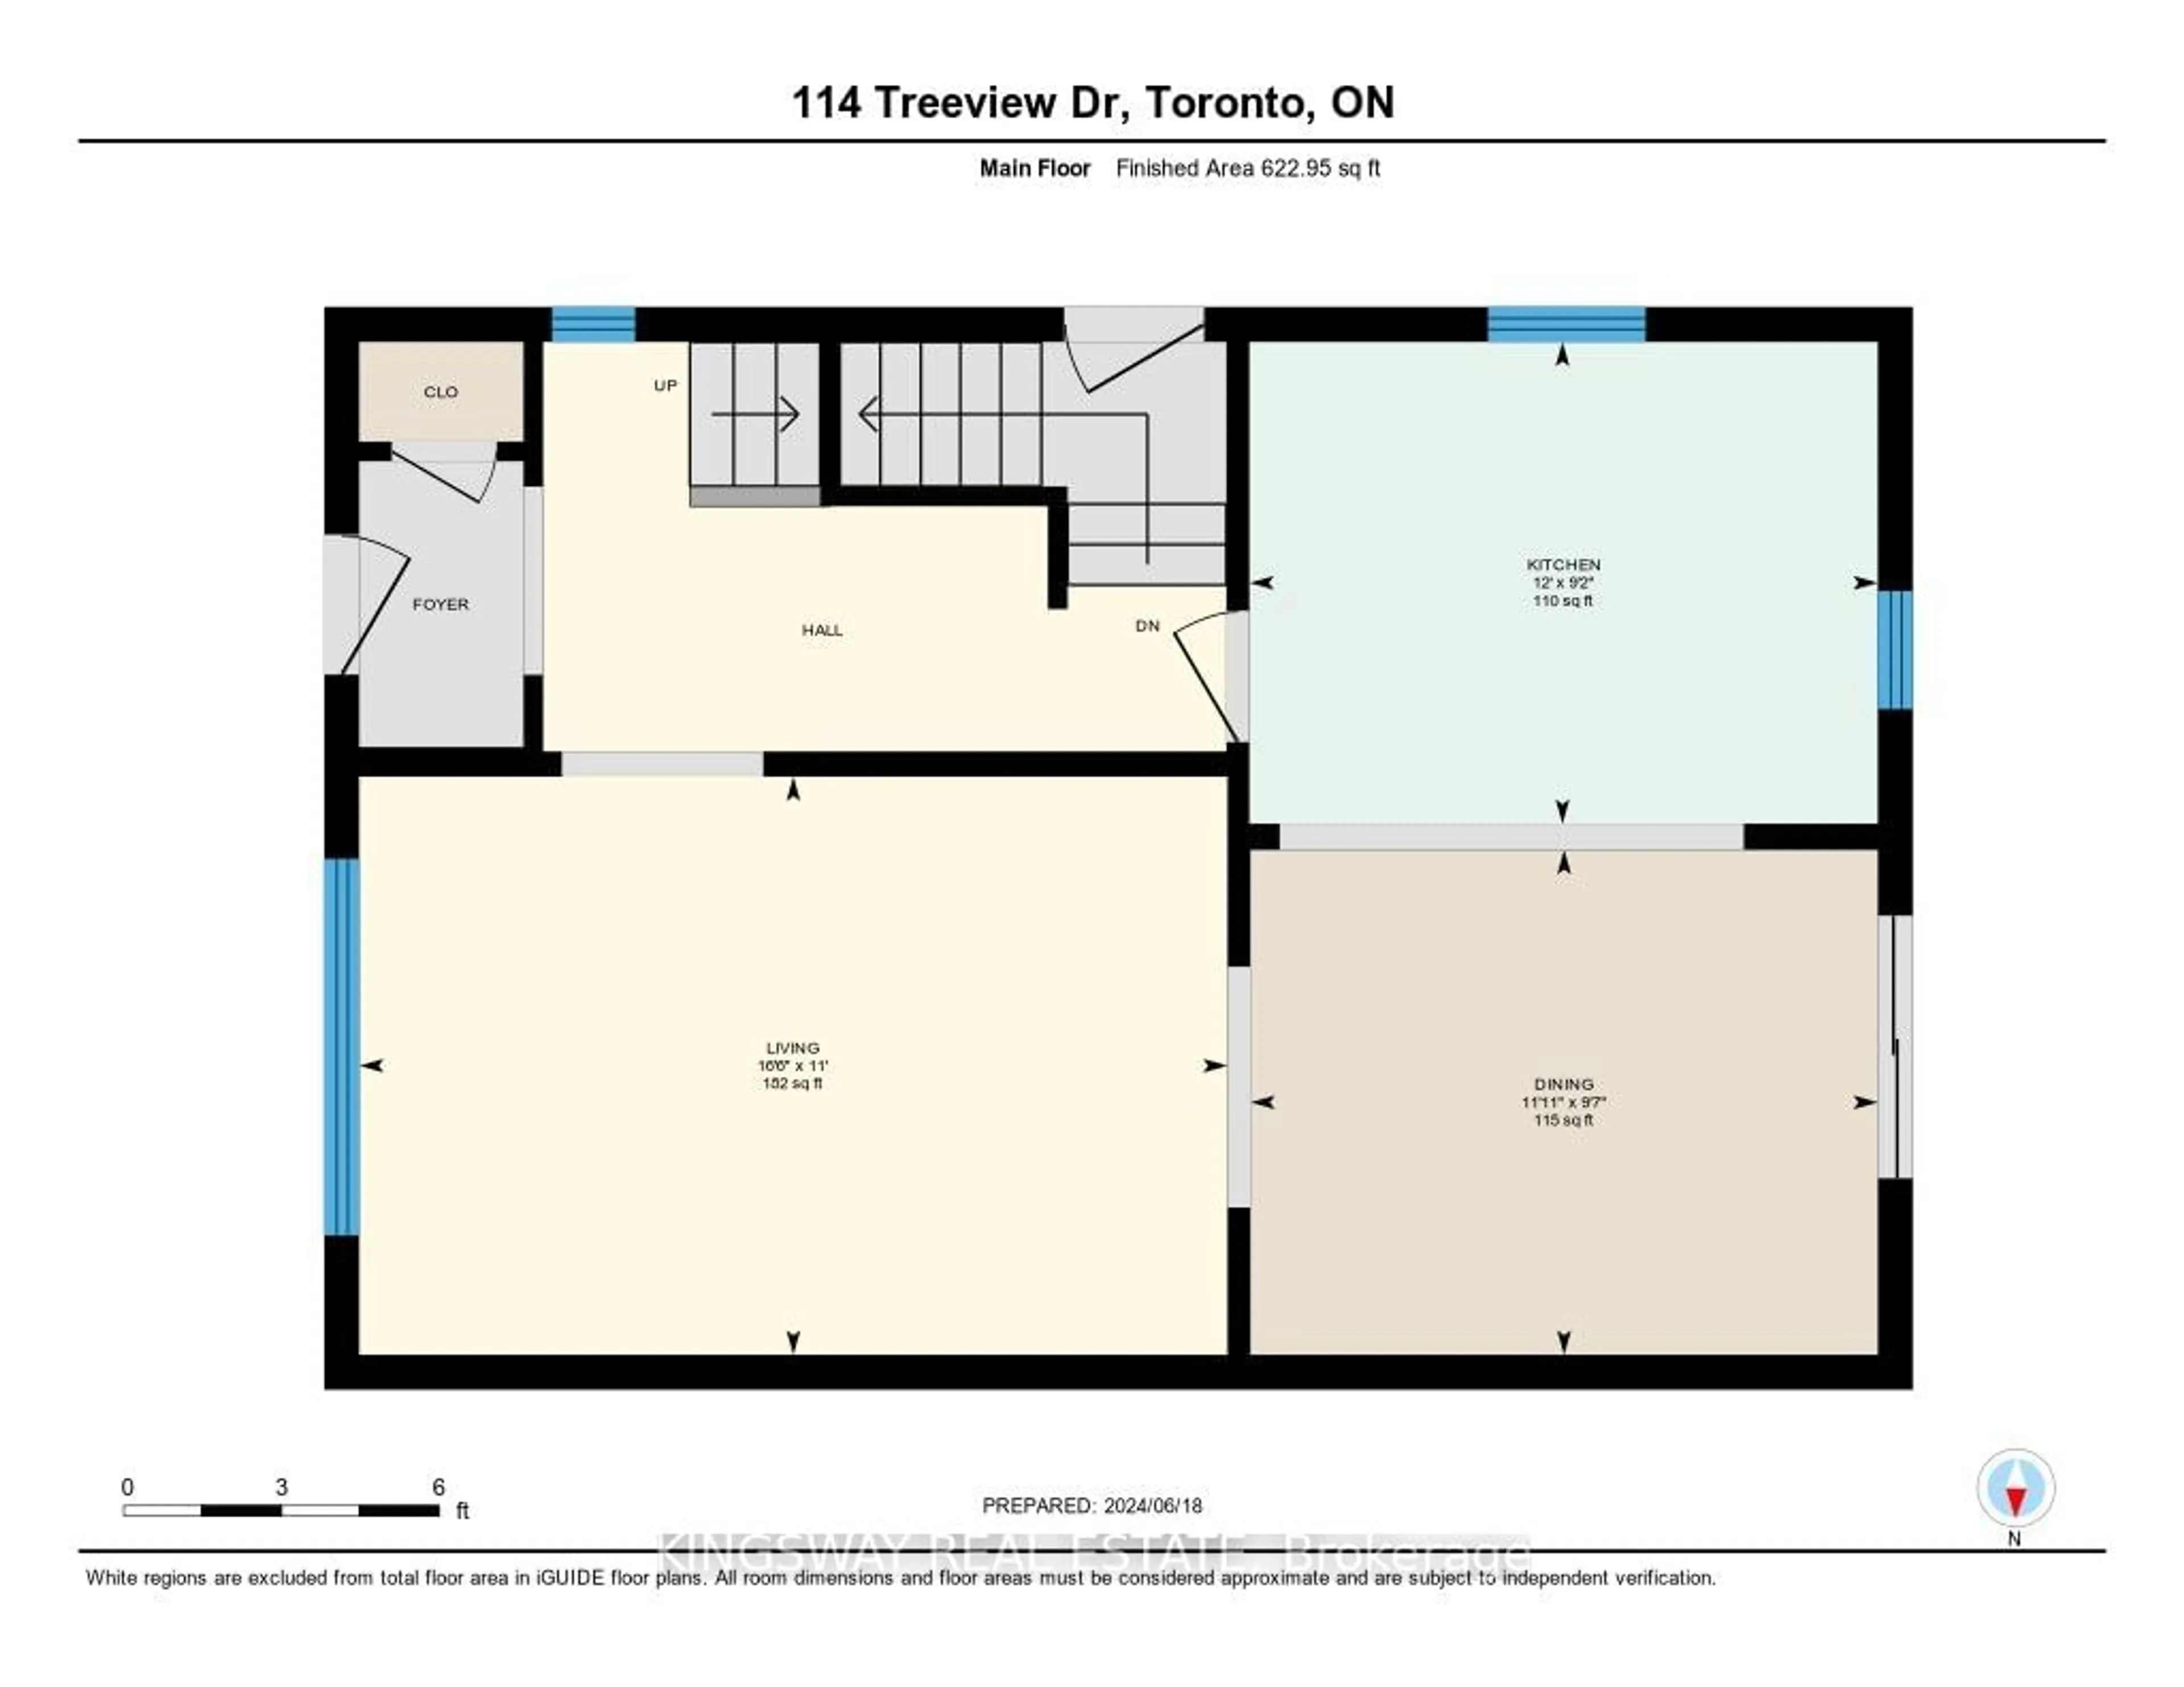 Floor plan for 114 Treeview Dr, Toronto Ontario M8W 4C3